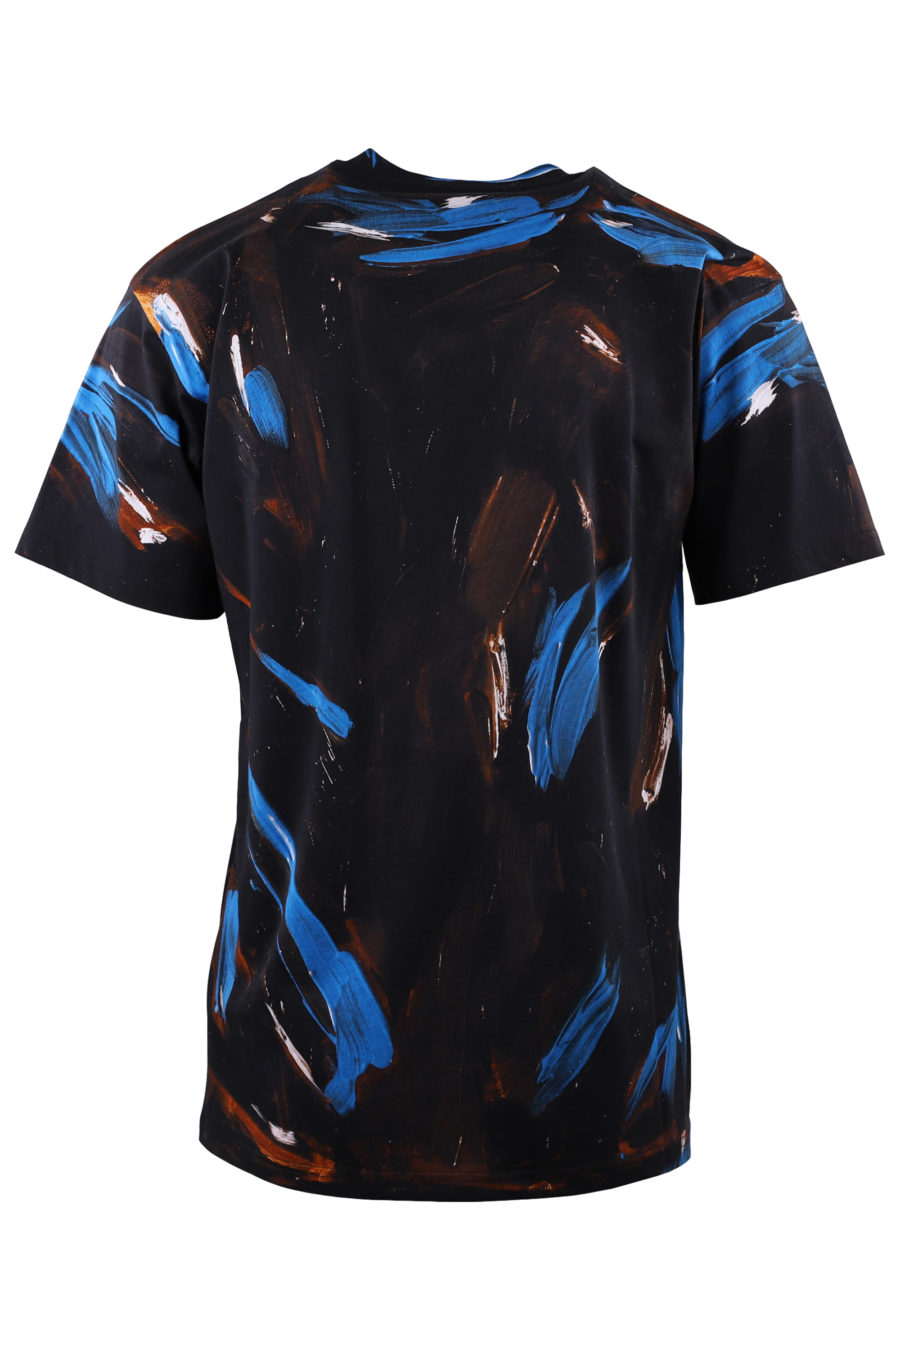 Camiseta negra con efecto pintura azul - 70c1582983007c7e515748c2f32f0a9f46827222